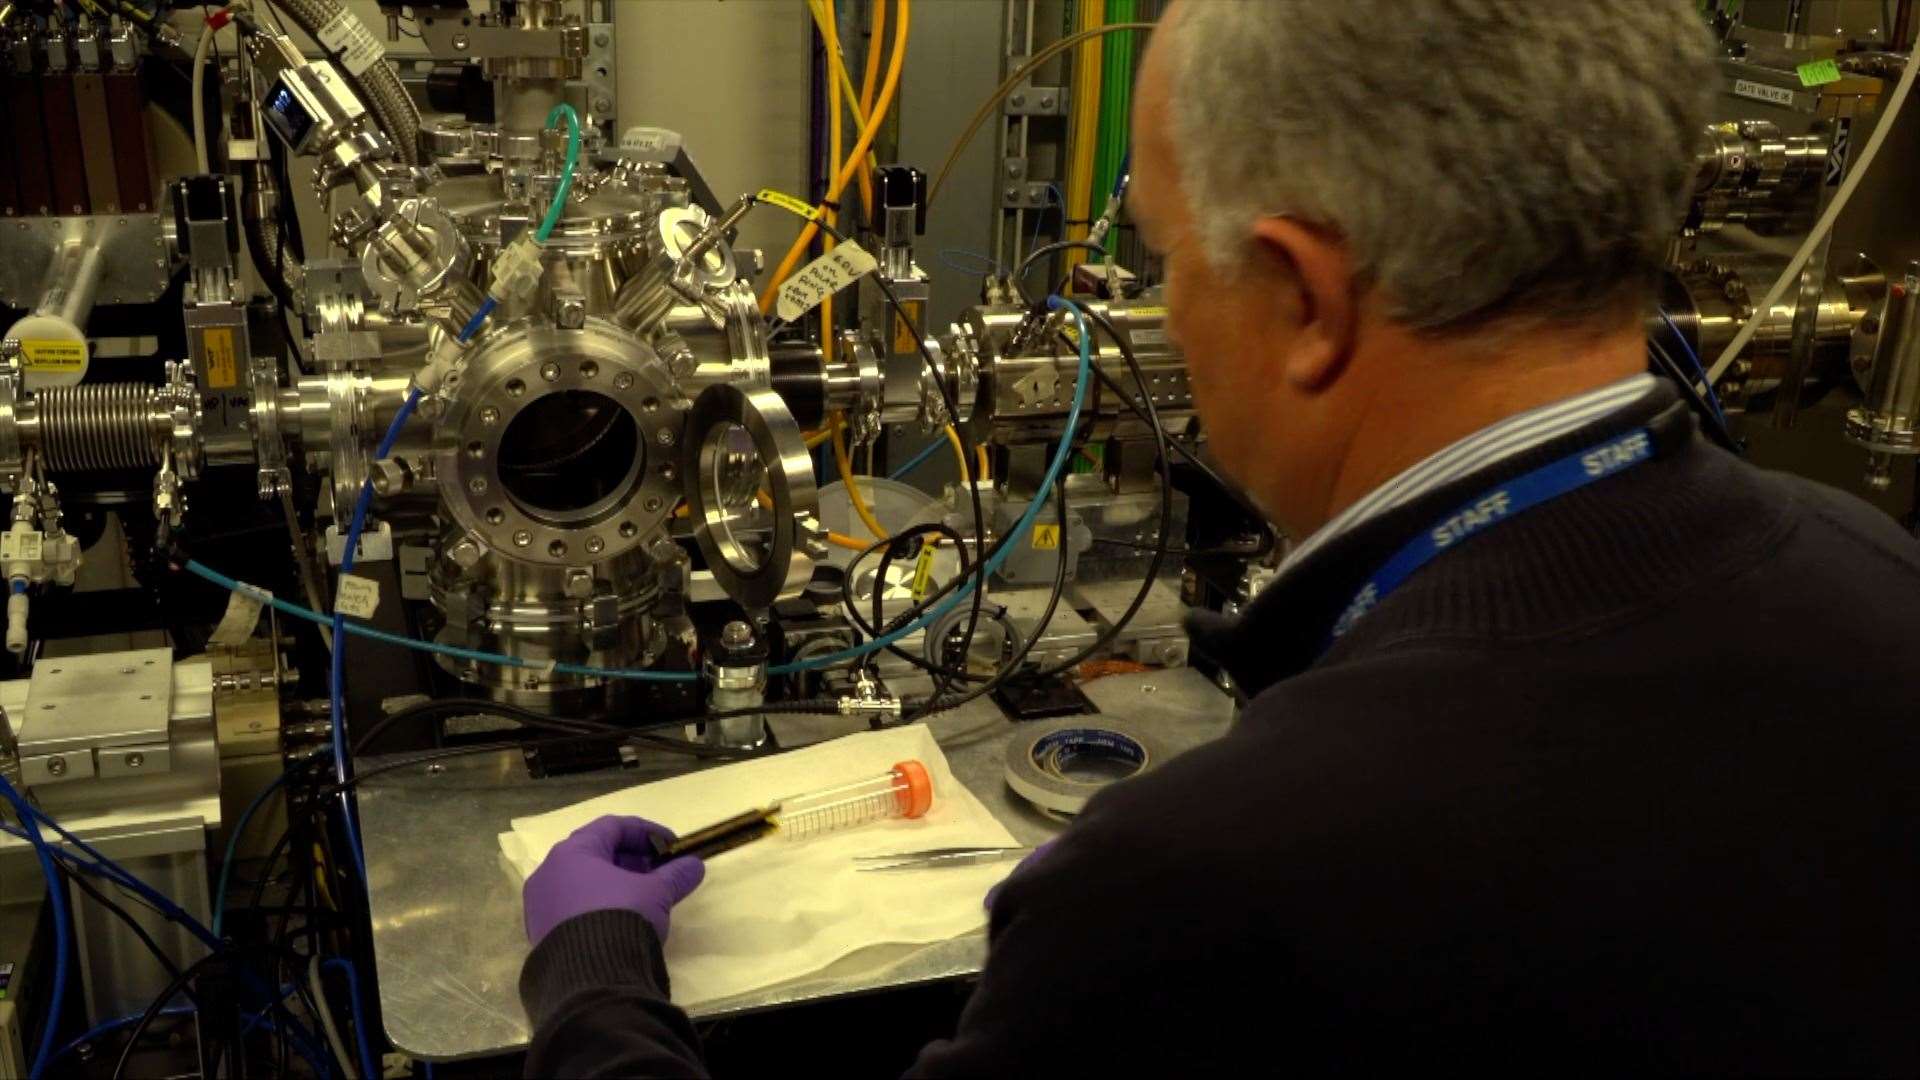 Restoration work at Diamond Light Source, the UK's national synchrotron facility